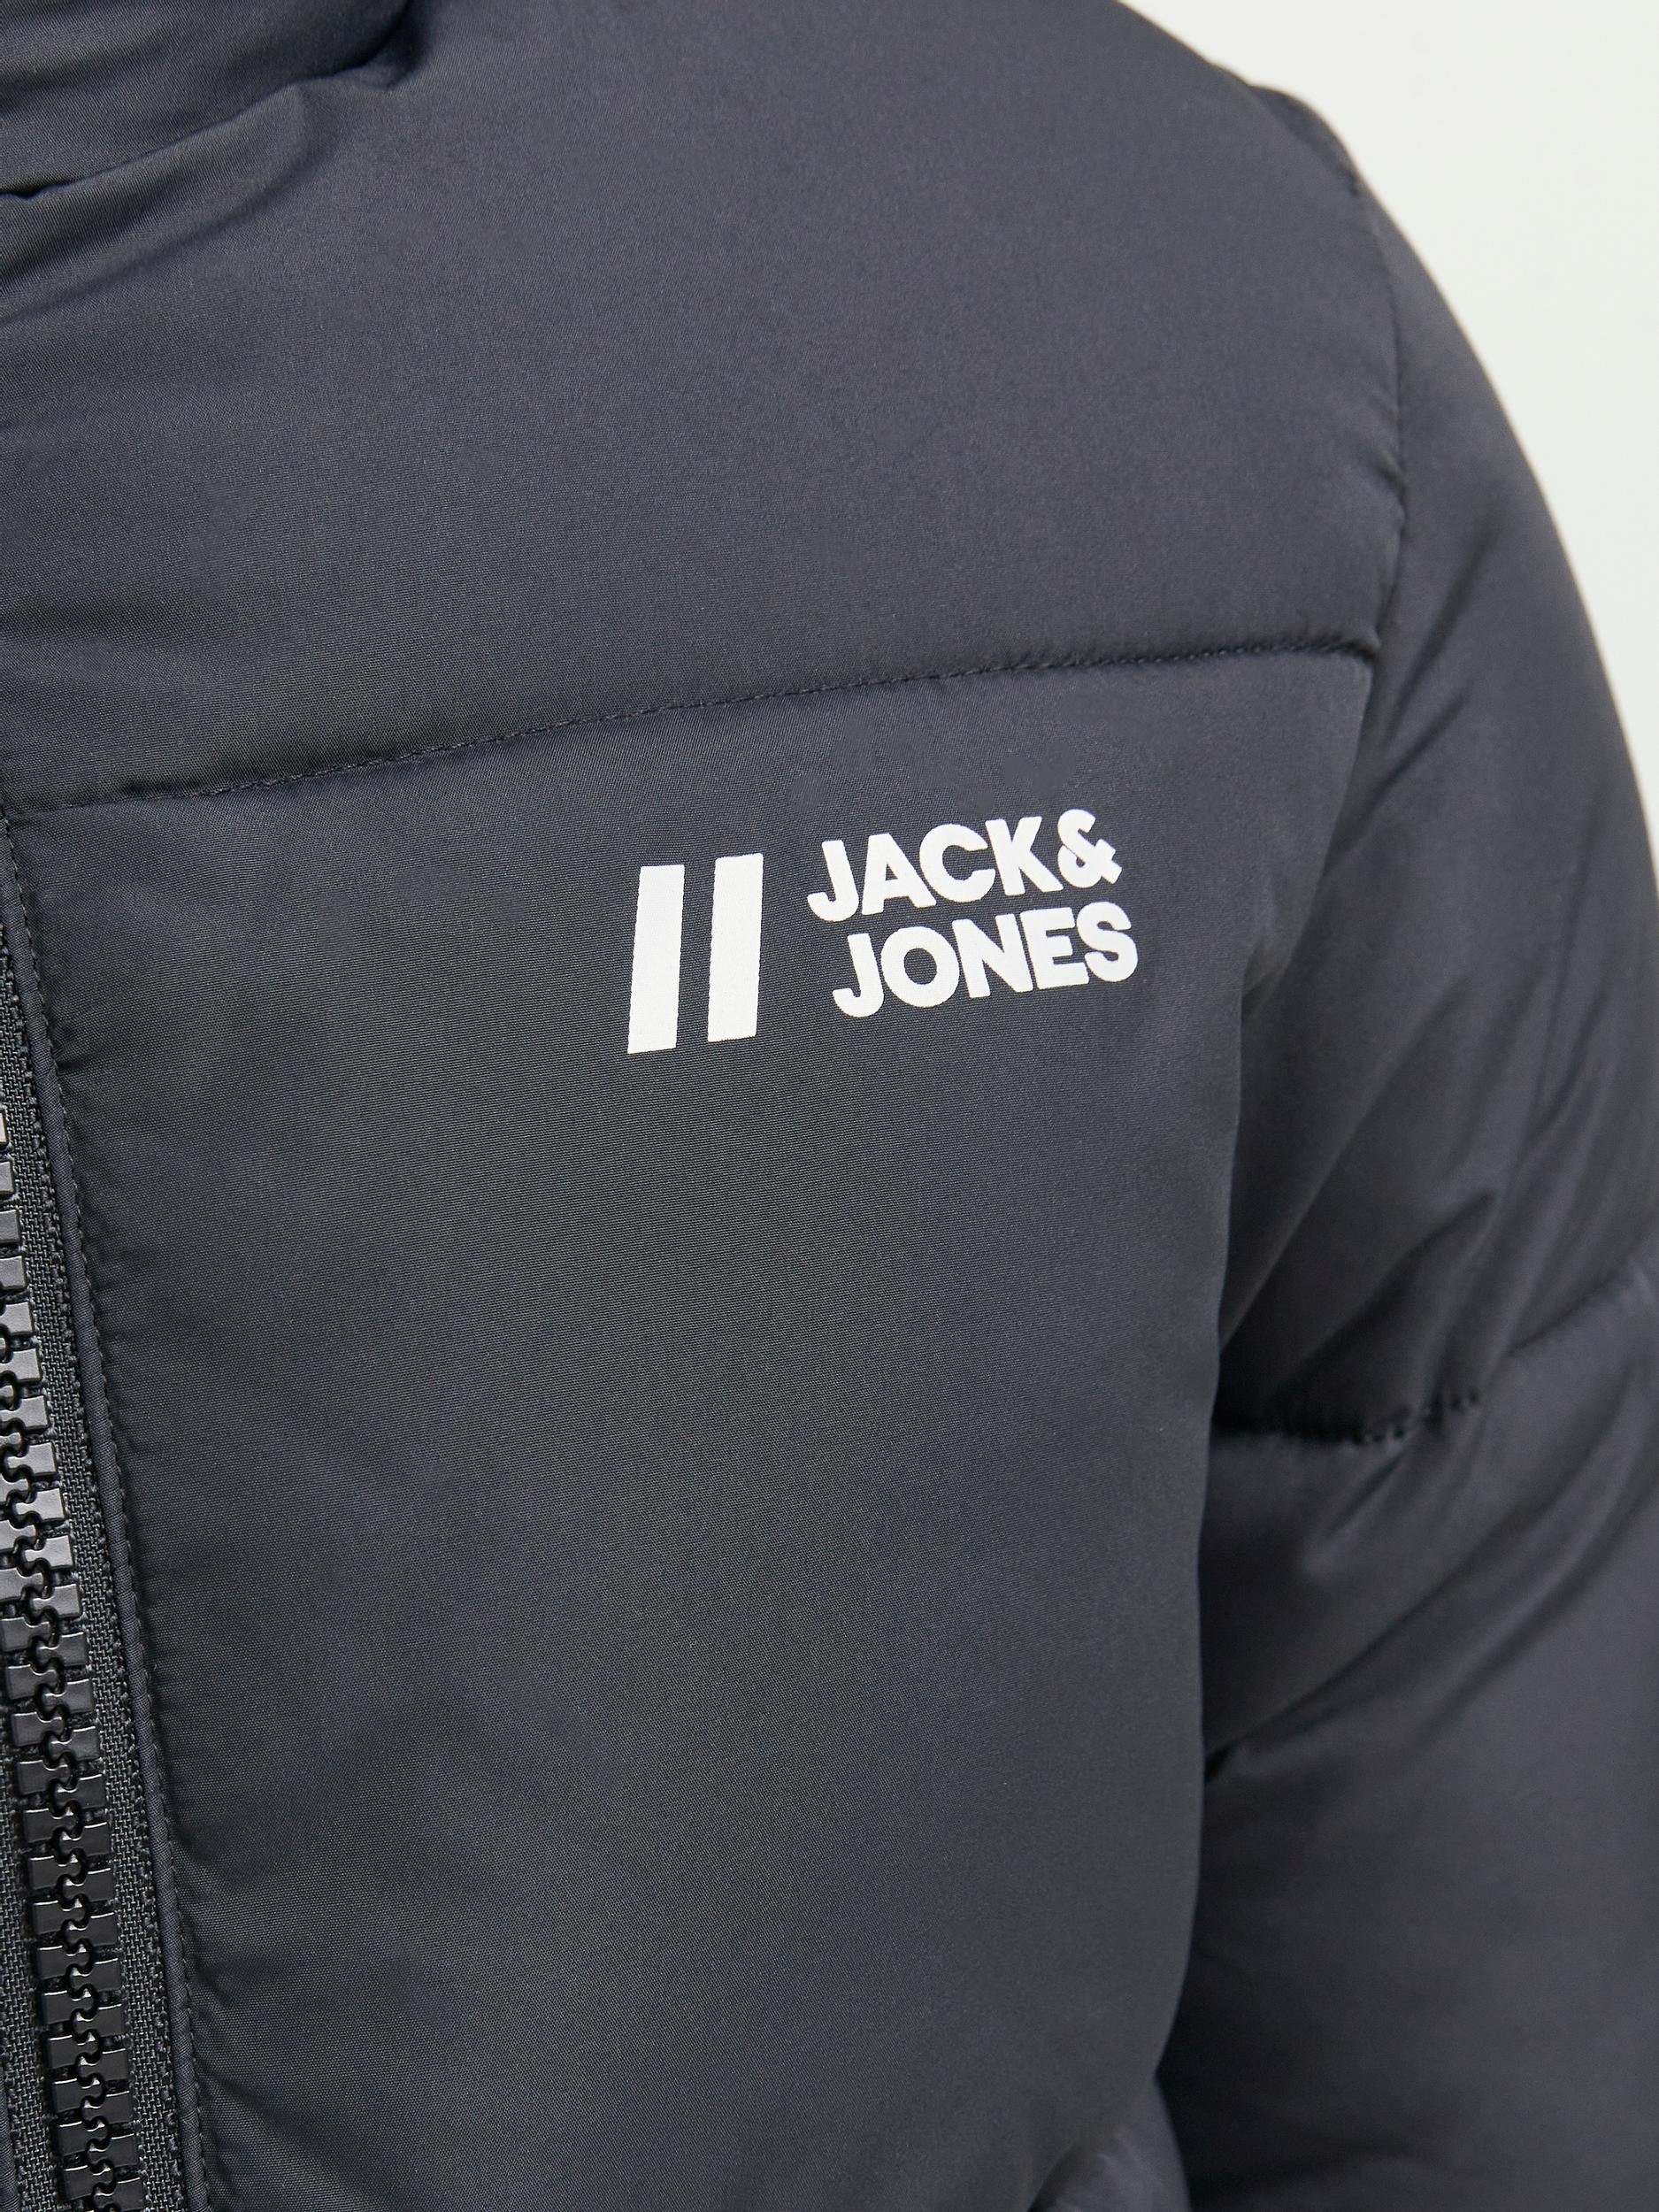 Jones & Steppjacke Black Junior Jack